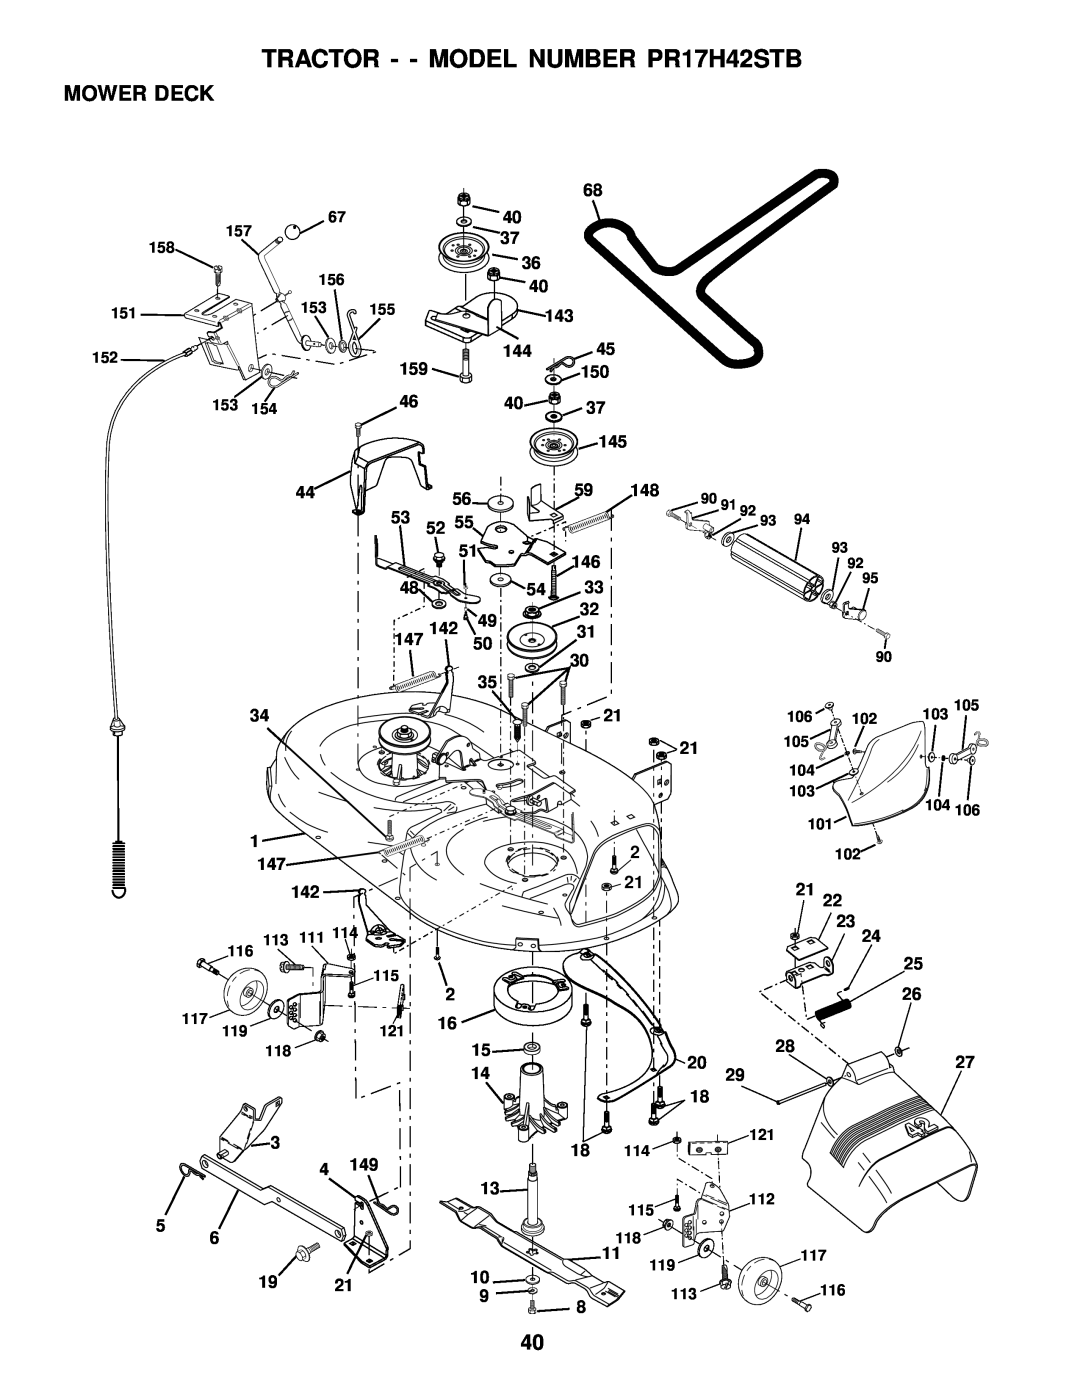 Poulan 177029 owner manual Mower Deck, TRACTOR - - MODEL NUMBER PR17H42STB 